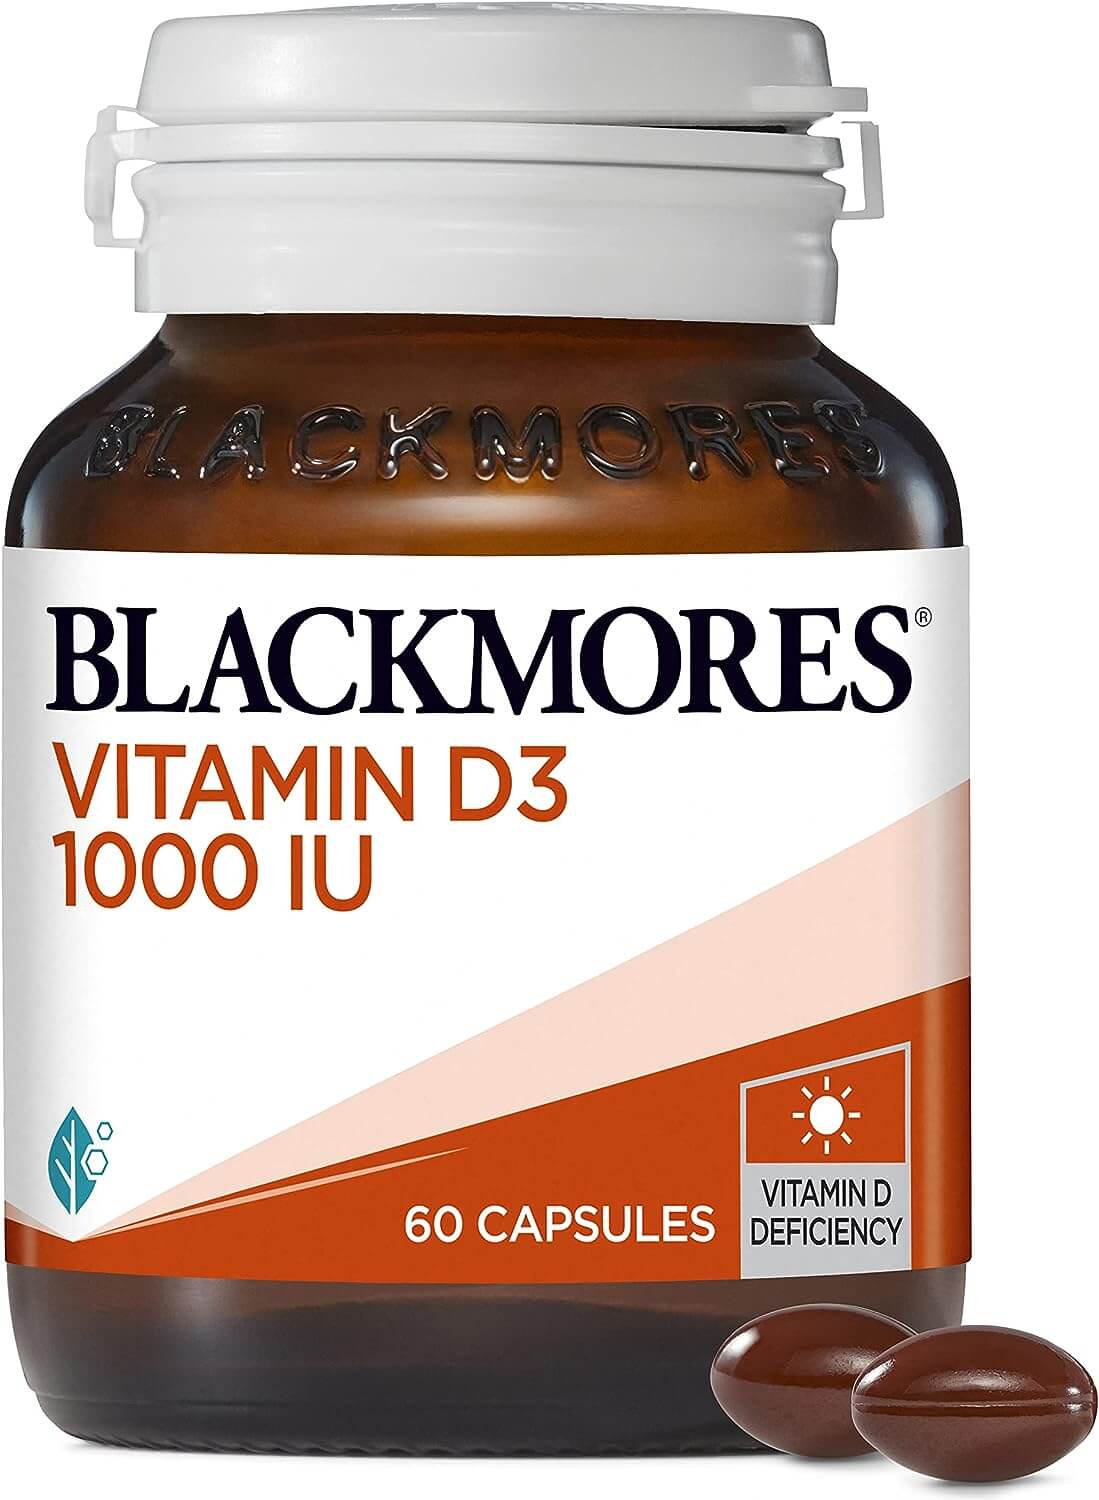 Витамин D3 Blackmores Vitamin D3 1000 МЕ, 60 таблеток витамин д3 2000 ме 200 таблеток sfd vitamin d3 для кожи волос ногтей препарат для мужчин и женщин